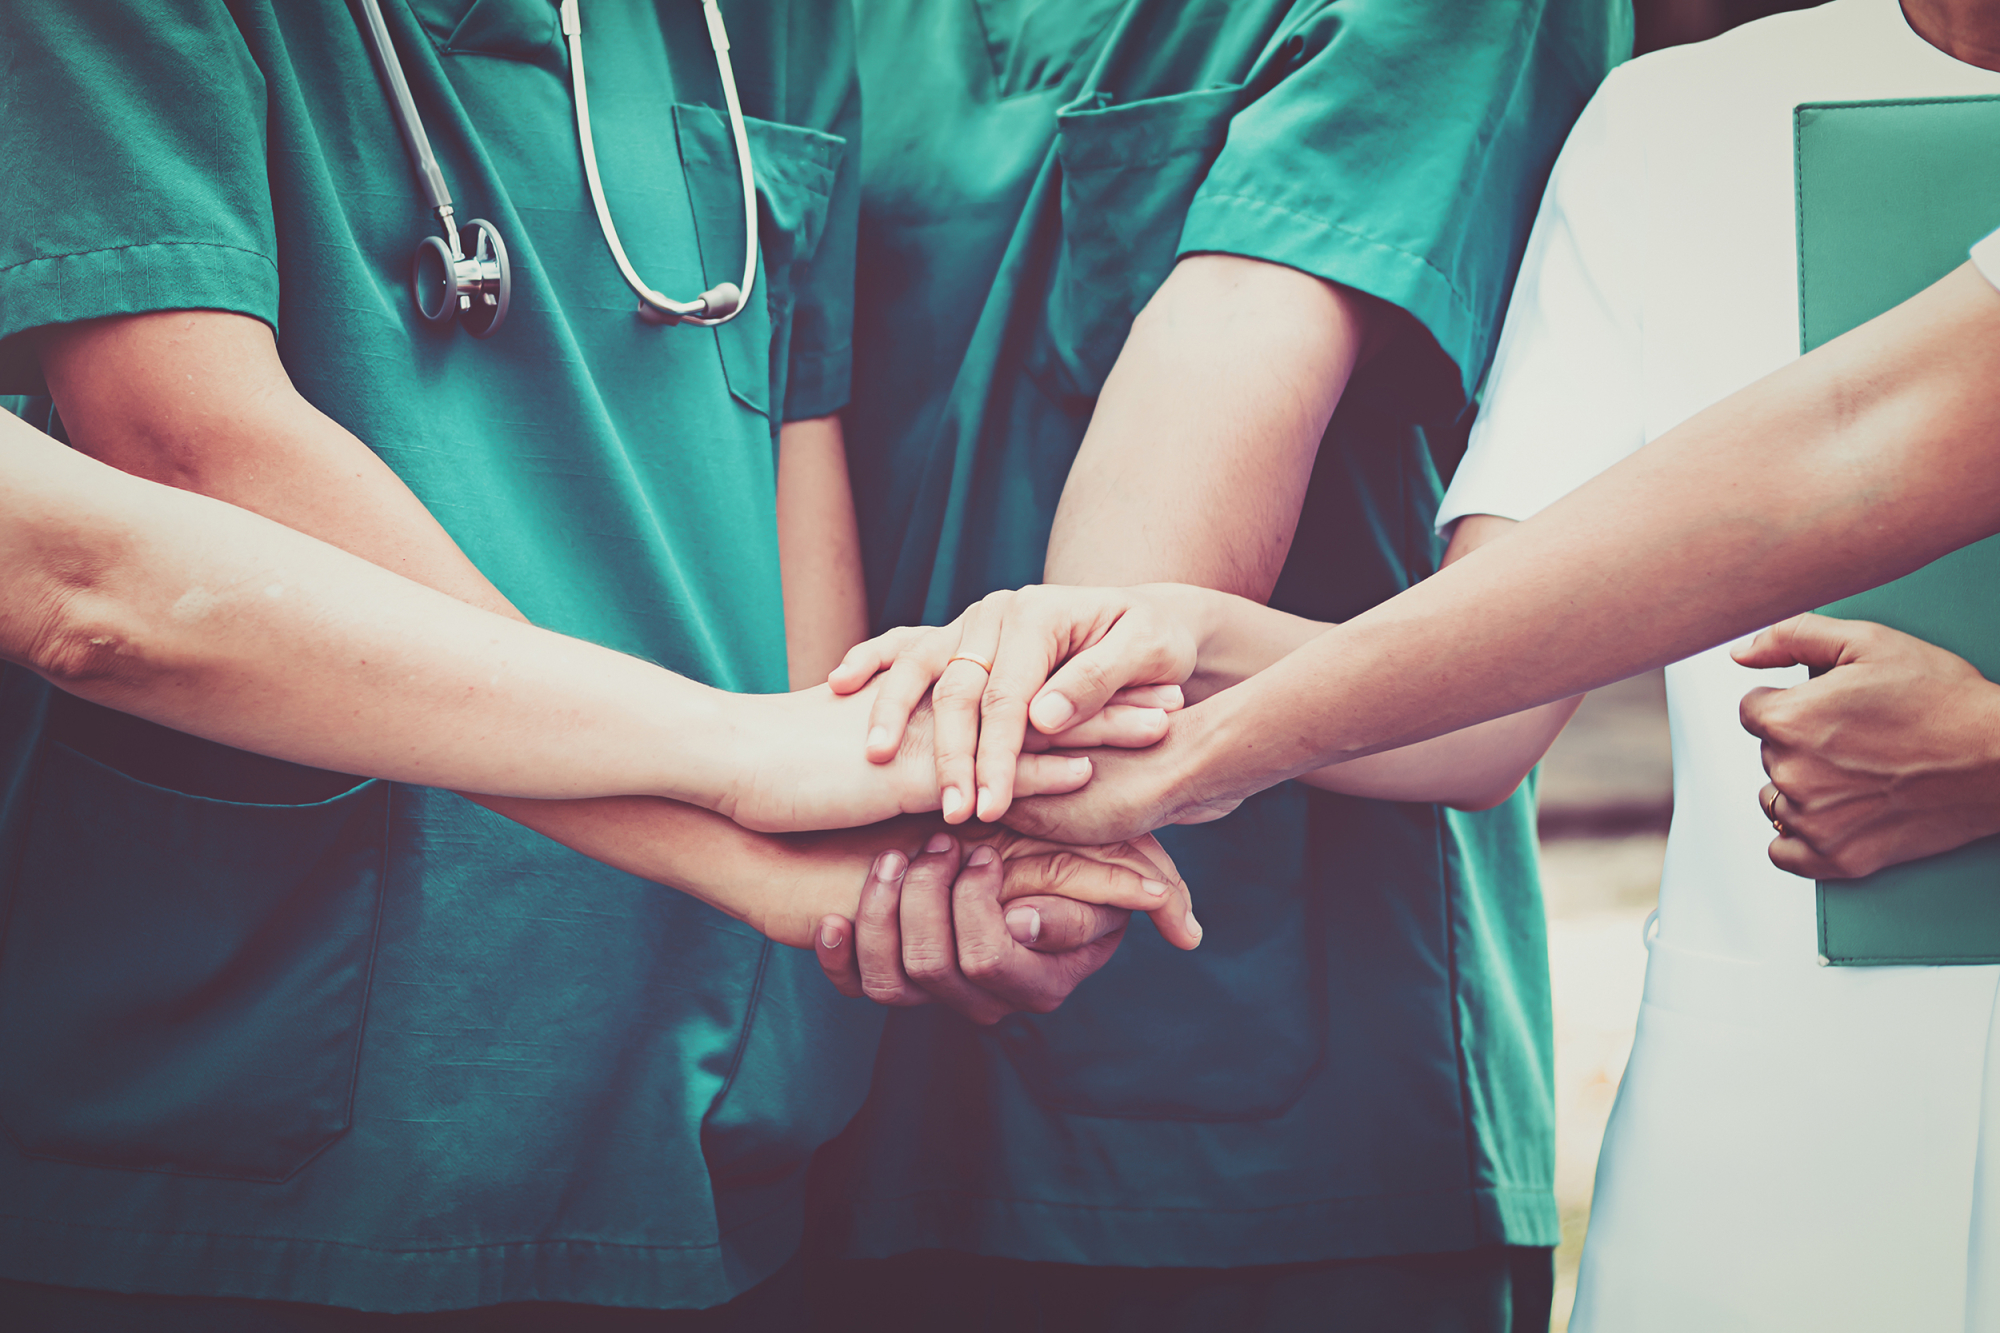 medics touching hands